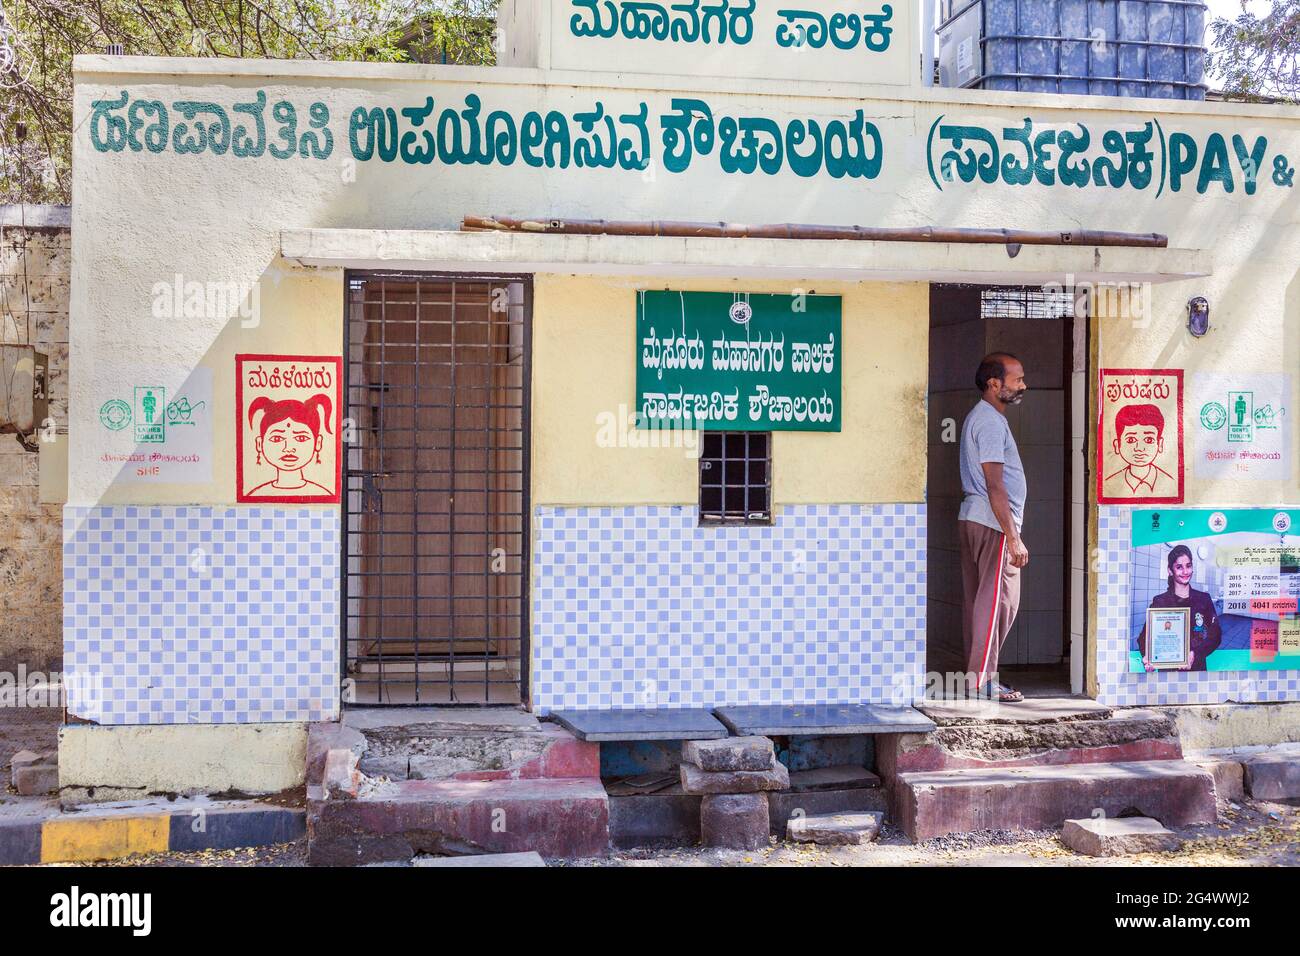 Toilet attendant standing in doorway of public conveniences in Mysore, Karnataka, India Stock Photo